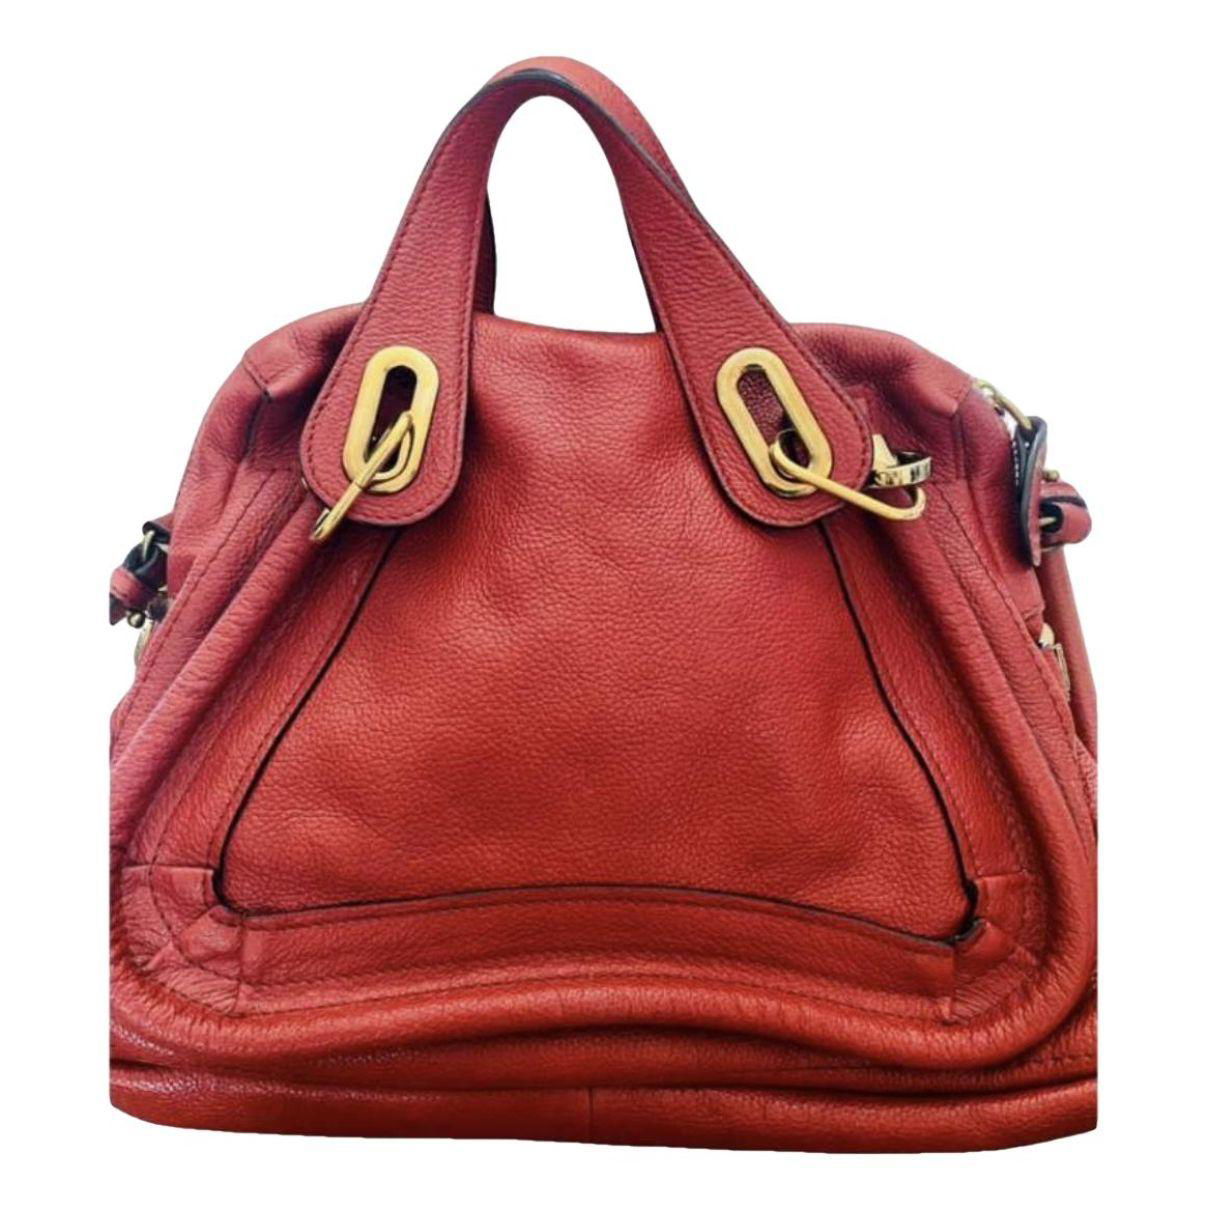 Paraty leather handbag by CHLOE